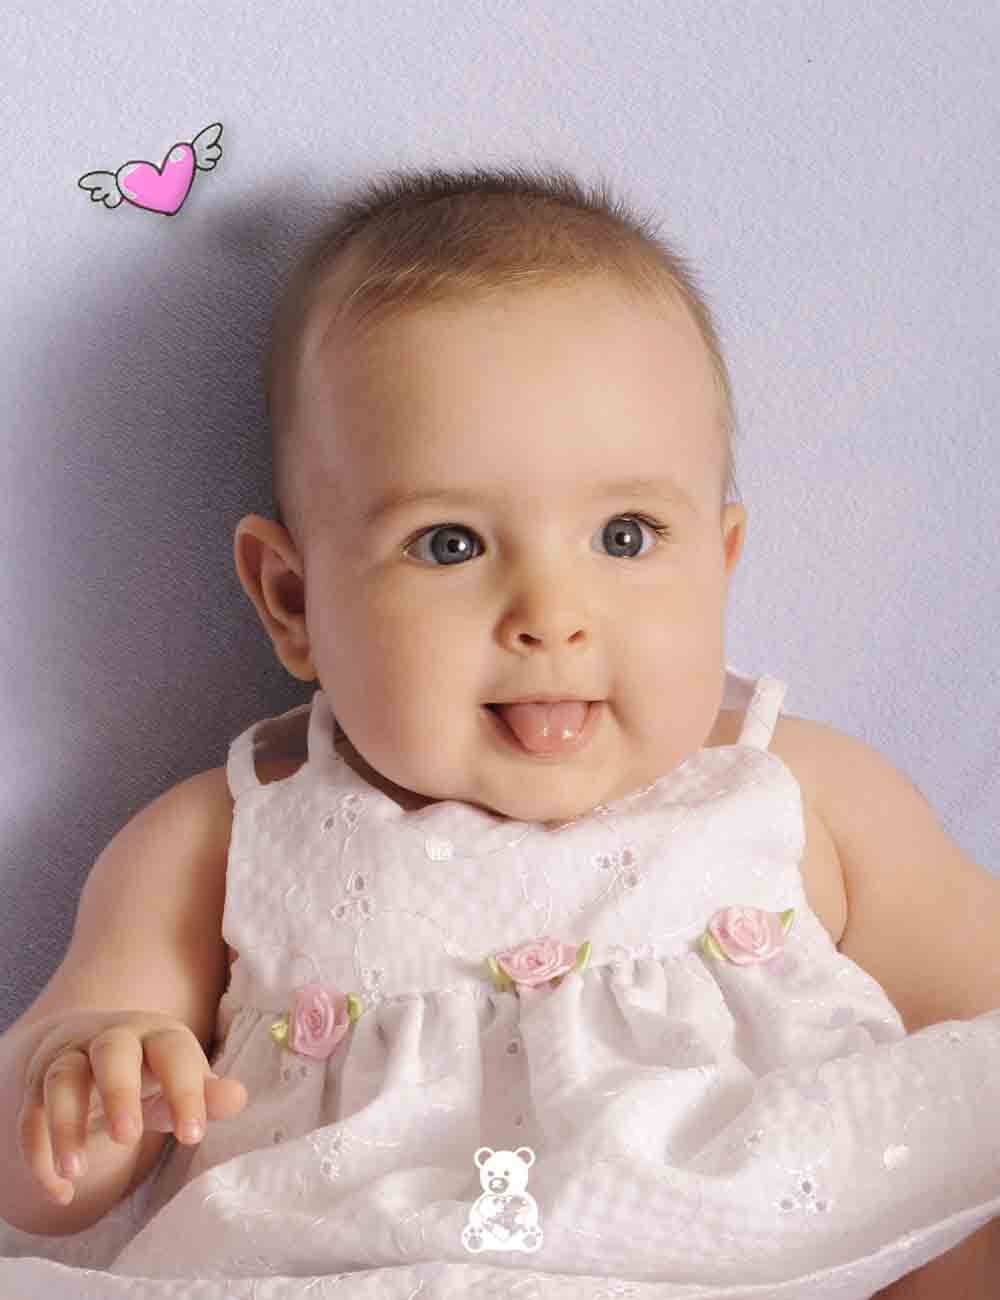 BABY DRESS 0-6 MONTHS / BEBÉS RECIÉN NACIDAS US $1.97 polreskudus.com